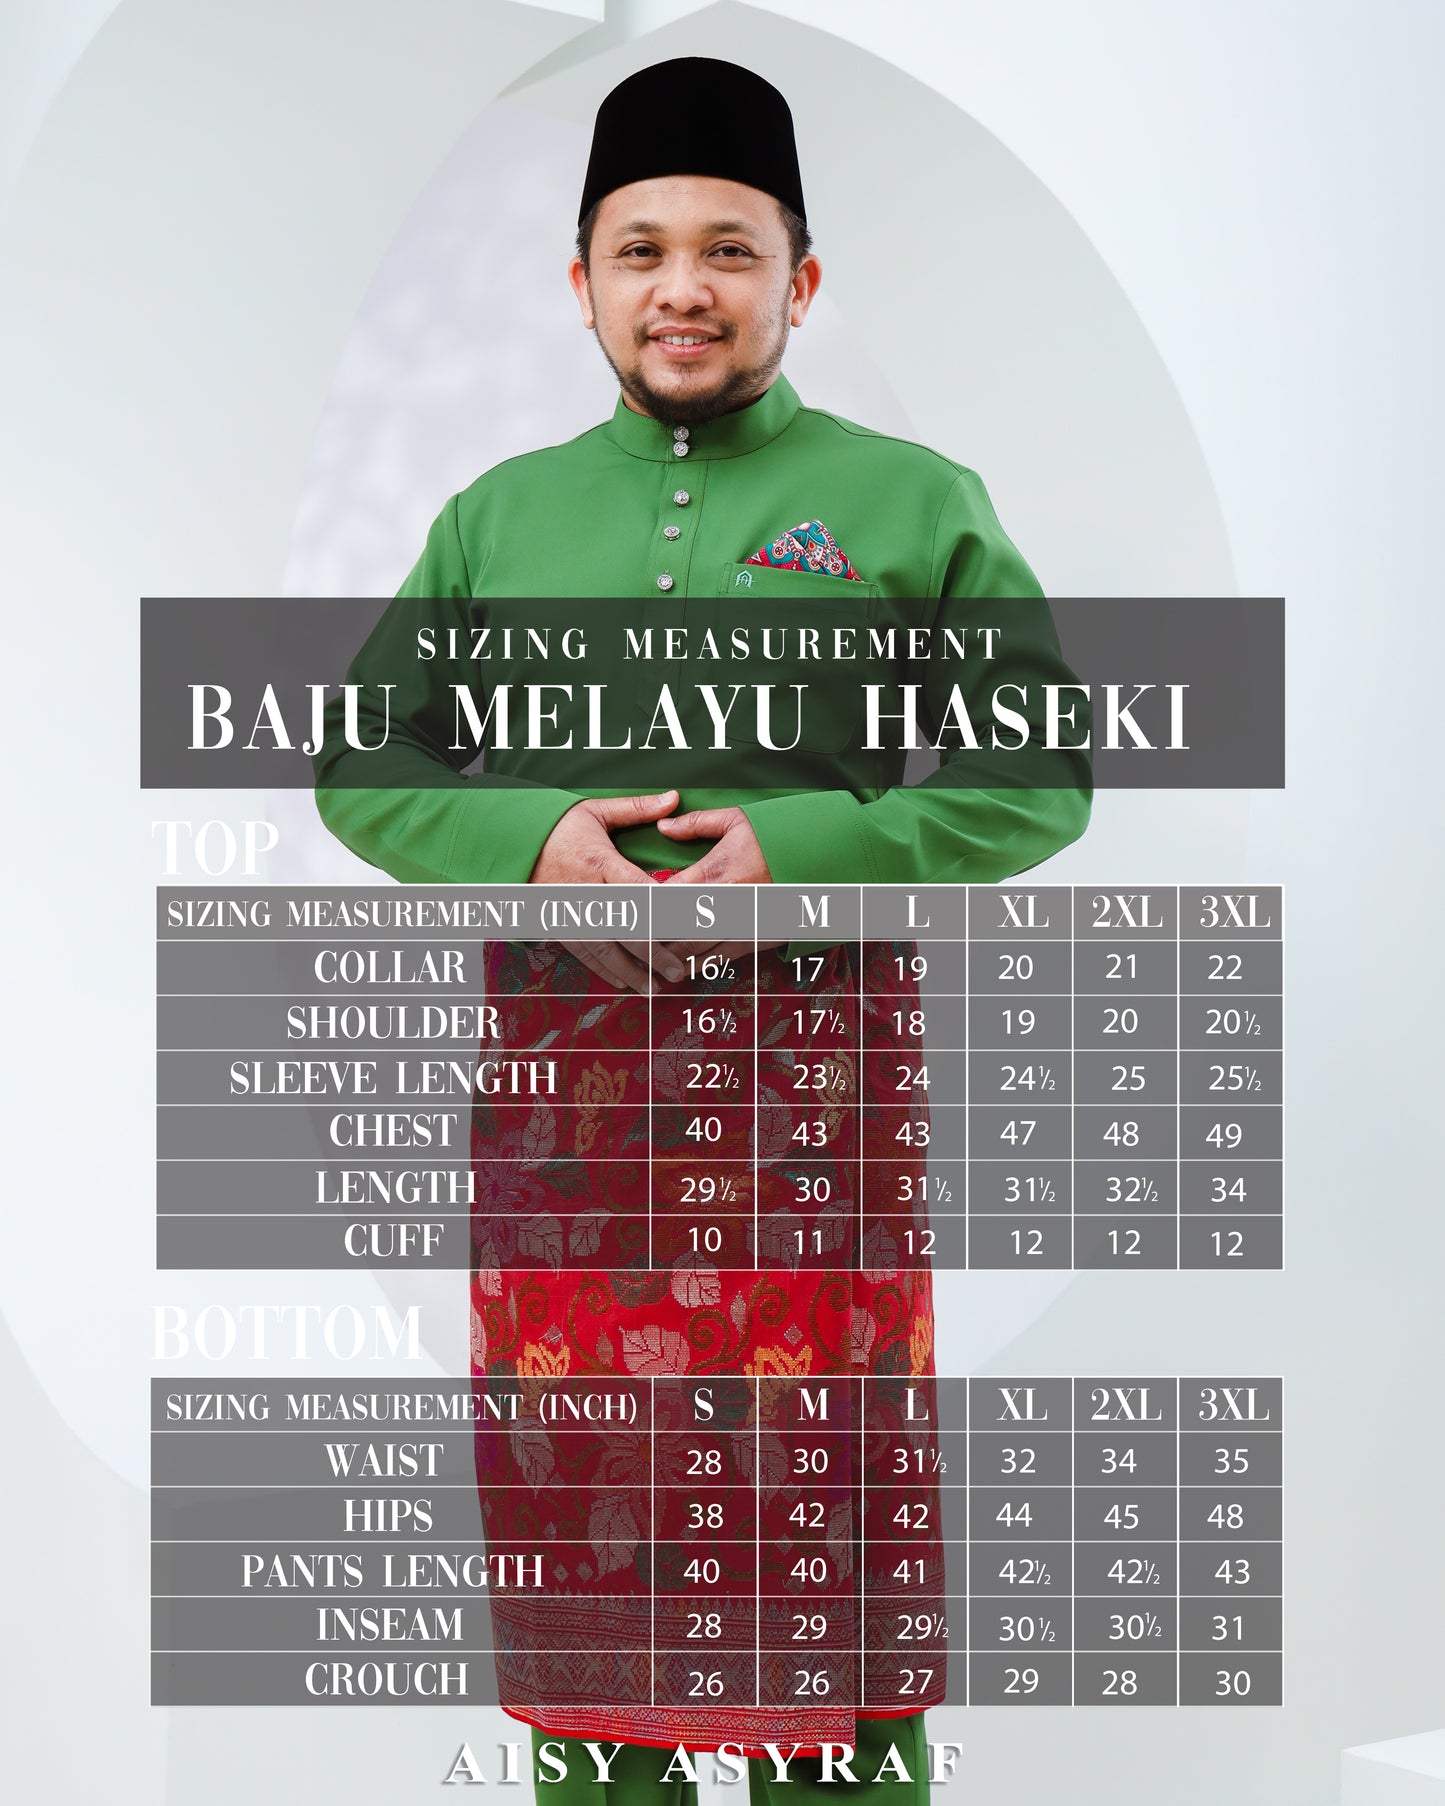 Baju Melayu Haseki - Pastel Mint